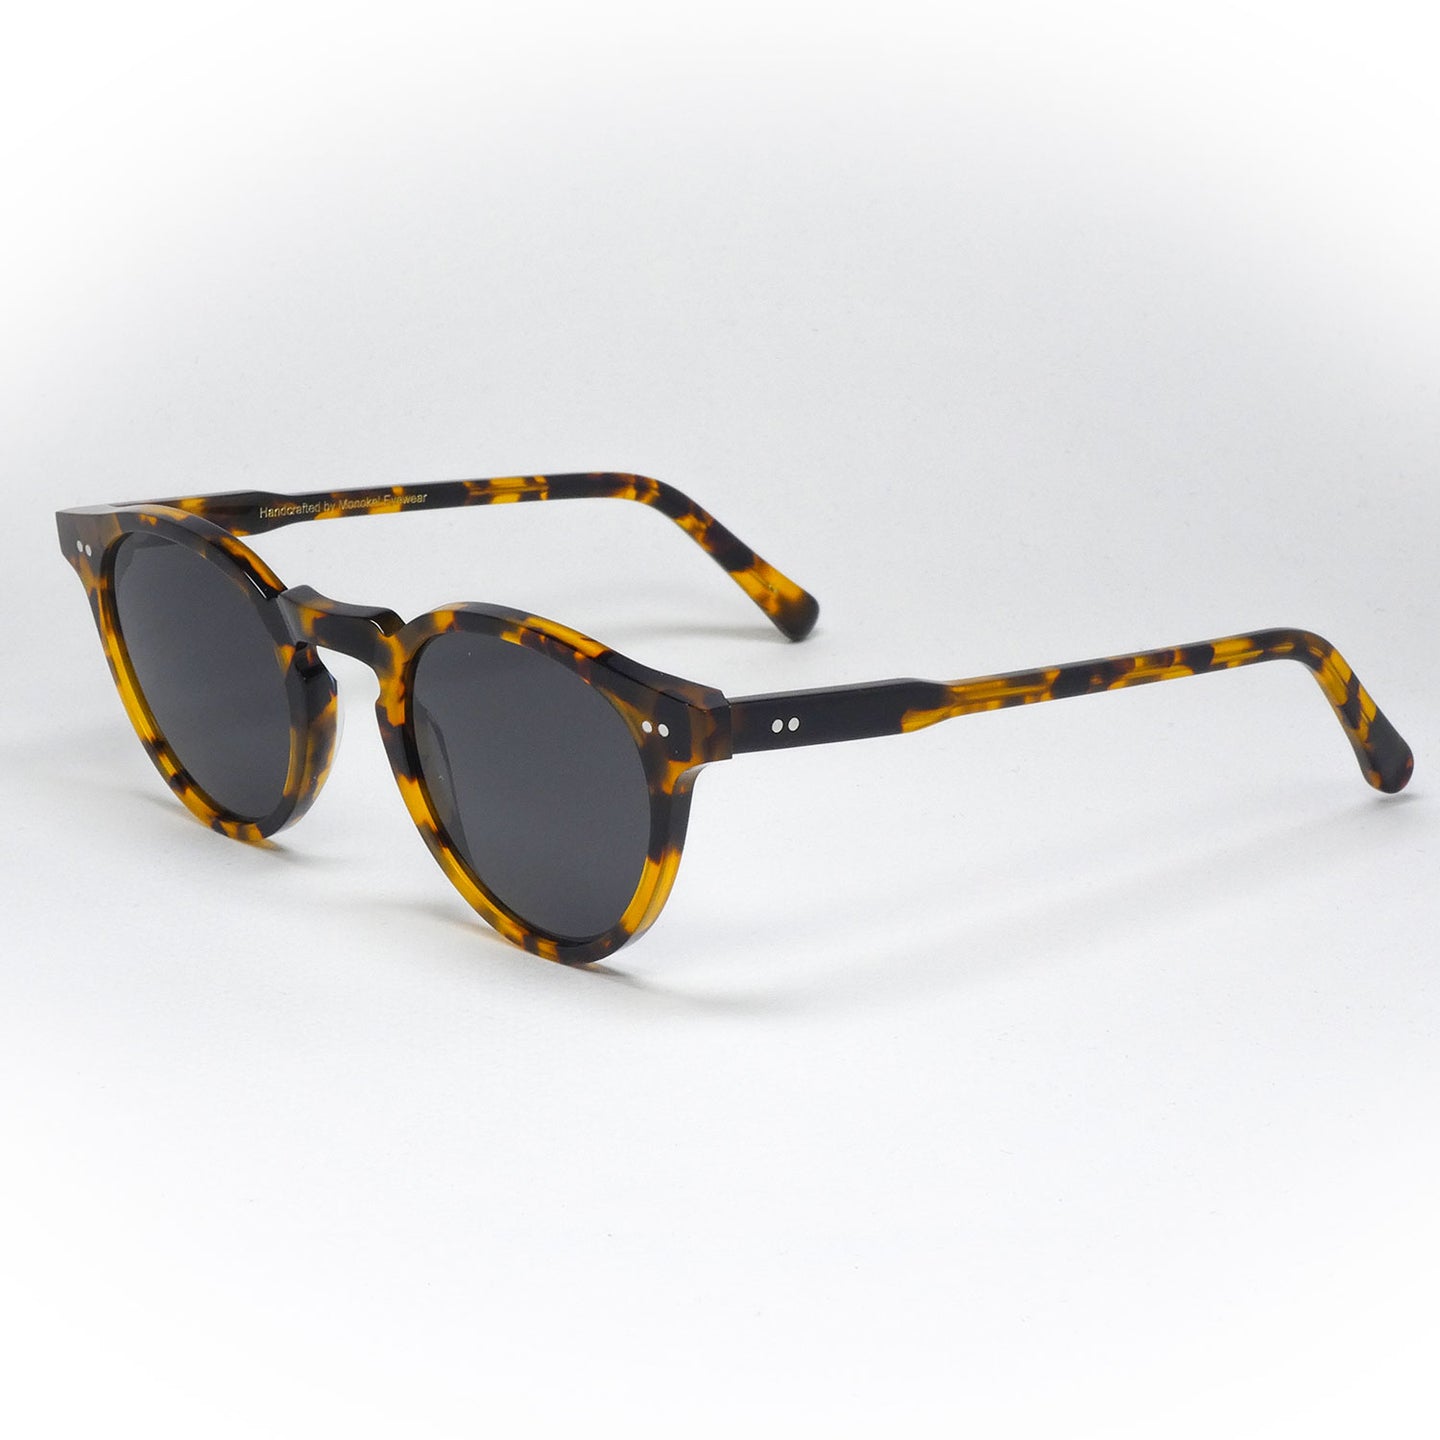 sunglasses monokel model forest color havana angled view